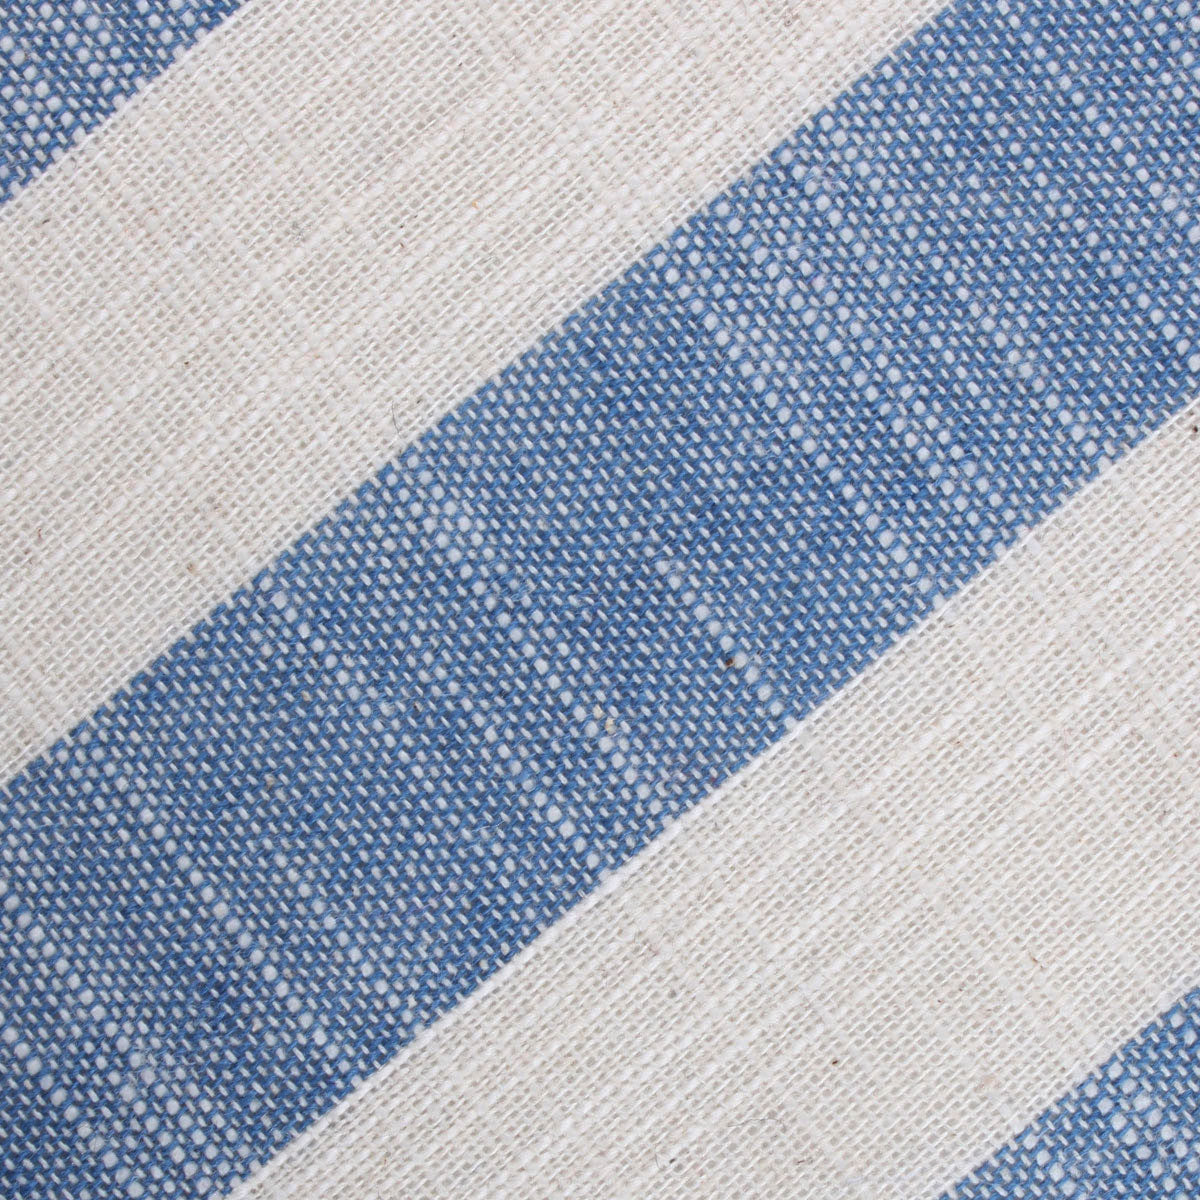 Kara Ada Light Blue Striped Linen Fabric Kids Diamond Bow Tie